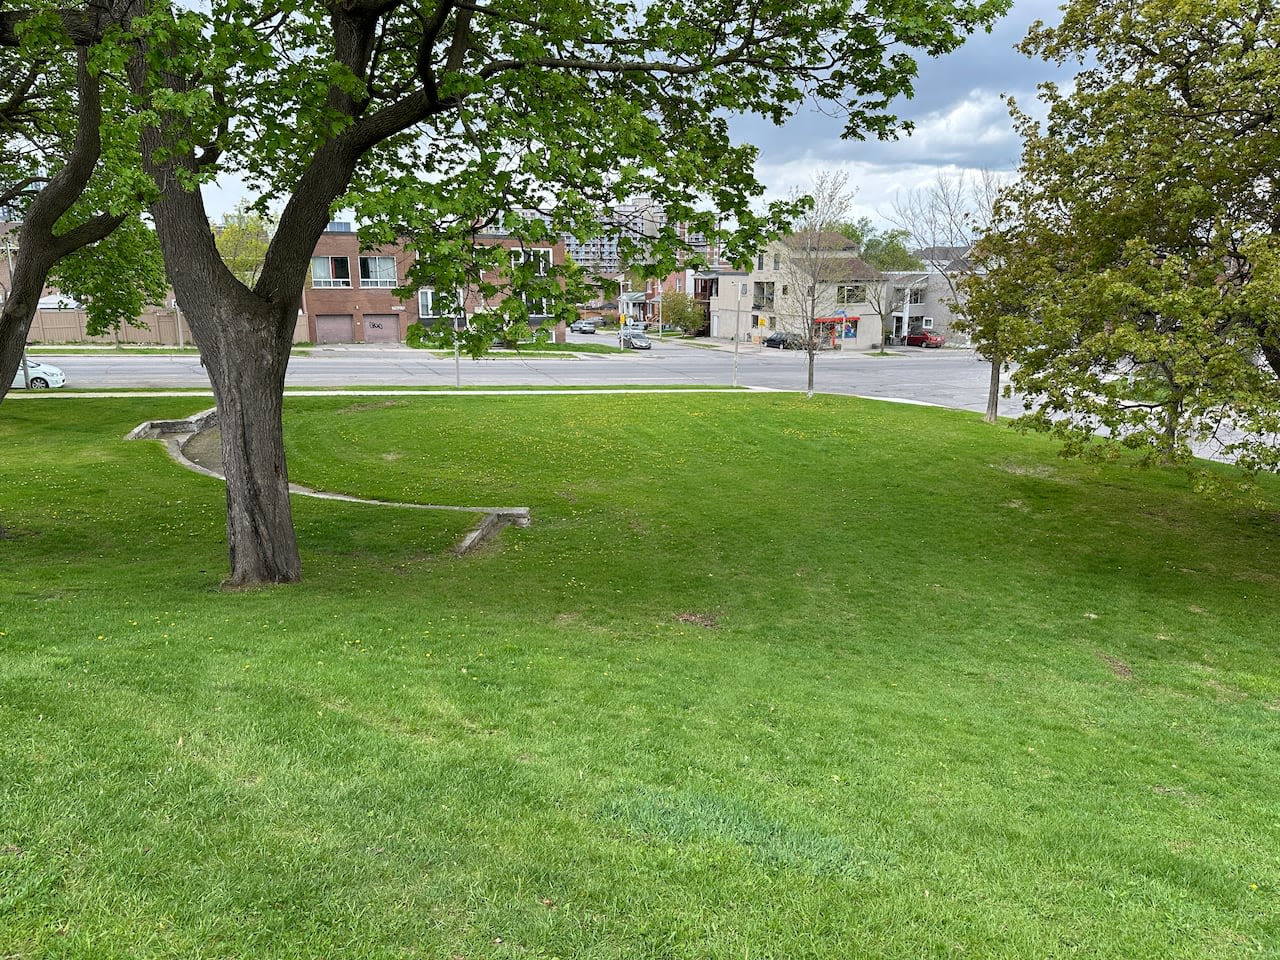 Neighbourhood group opposes Irish famine monument in Lowertown park